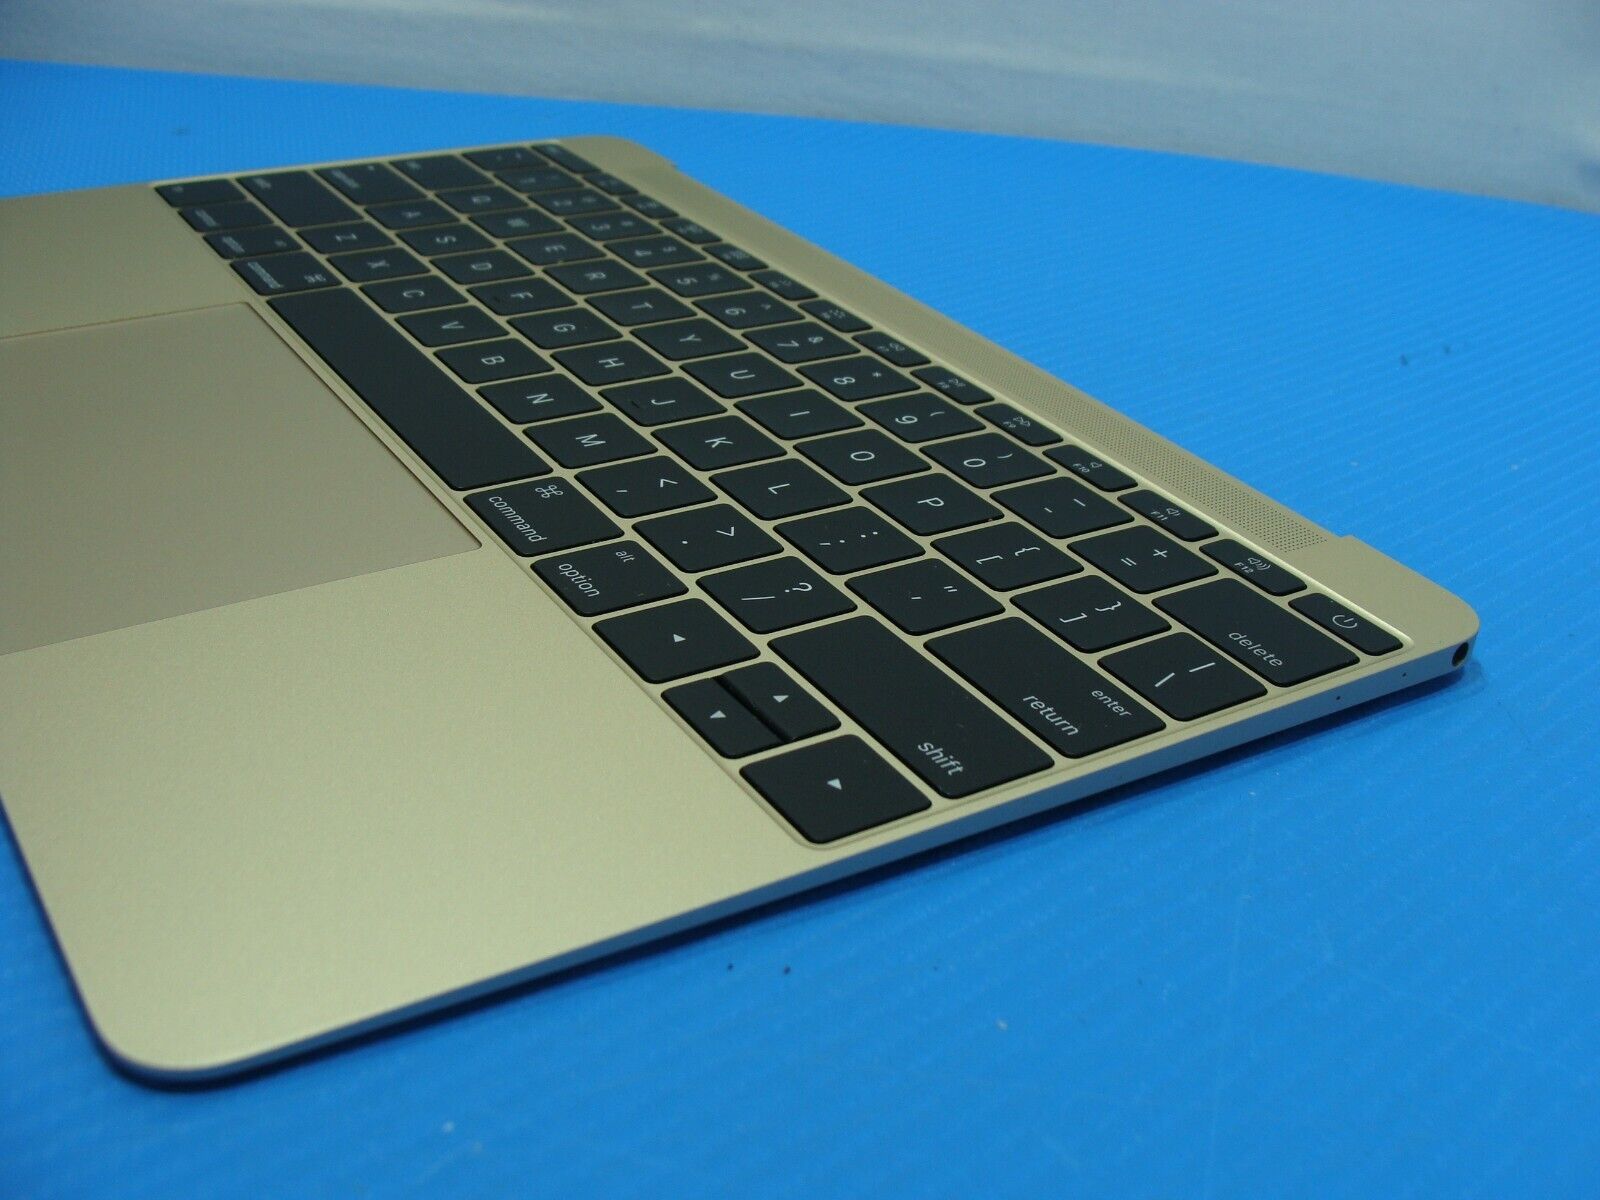 MacBook 12 A1534 2015 MK4M2LL MK4N2LL Top Case w/BL Keyboard TrackPad 661-02280